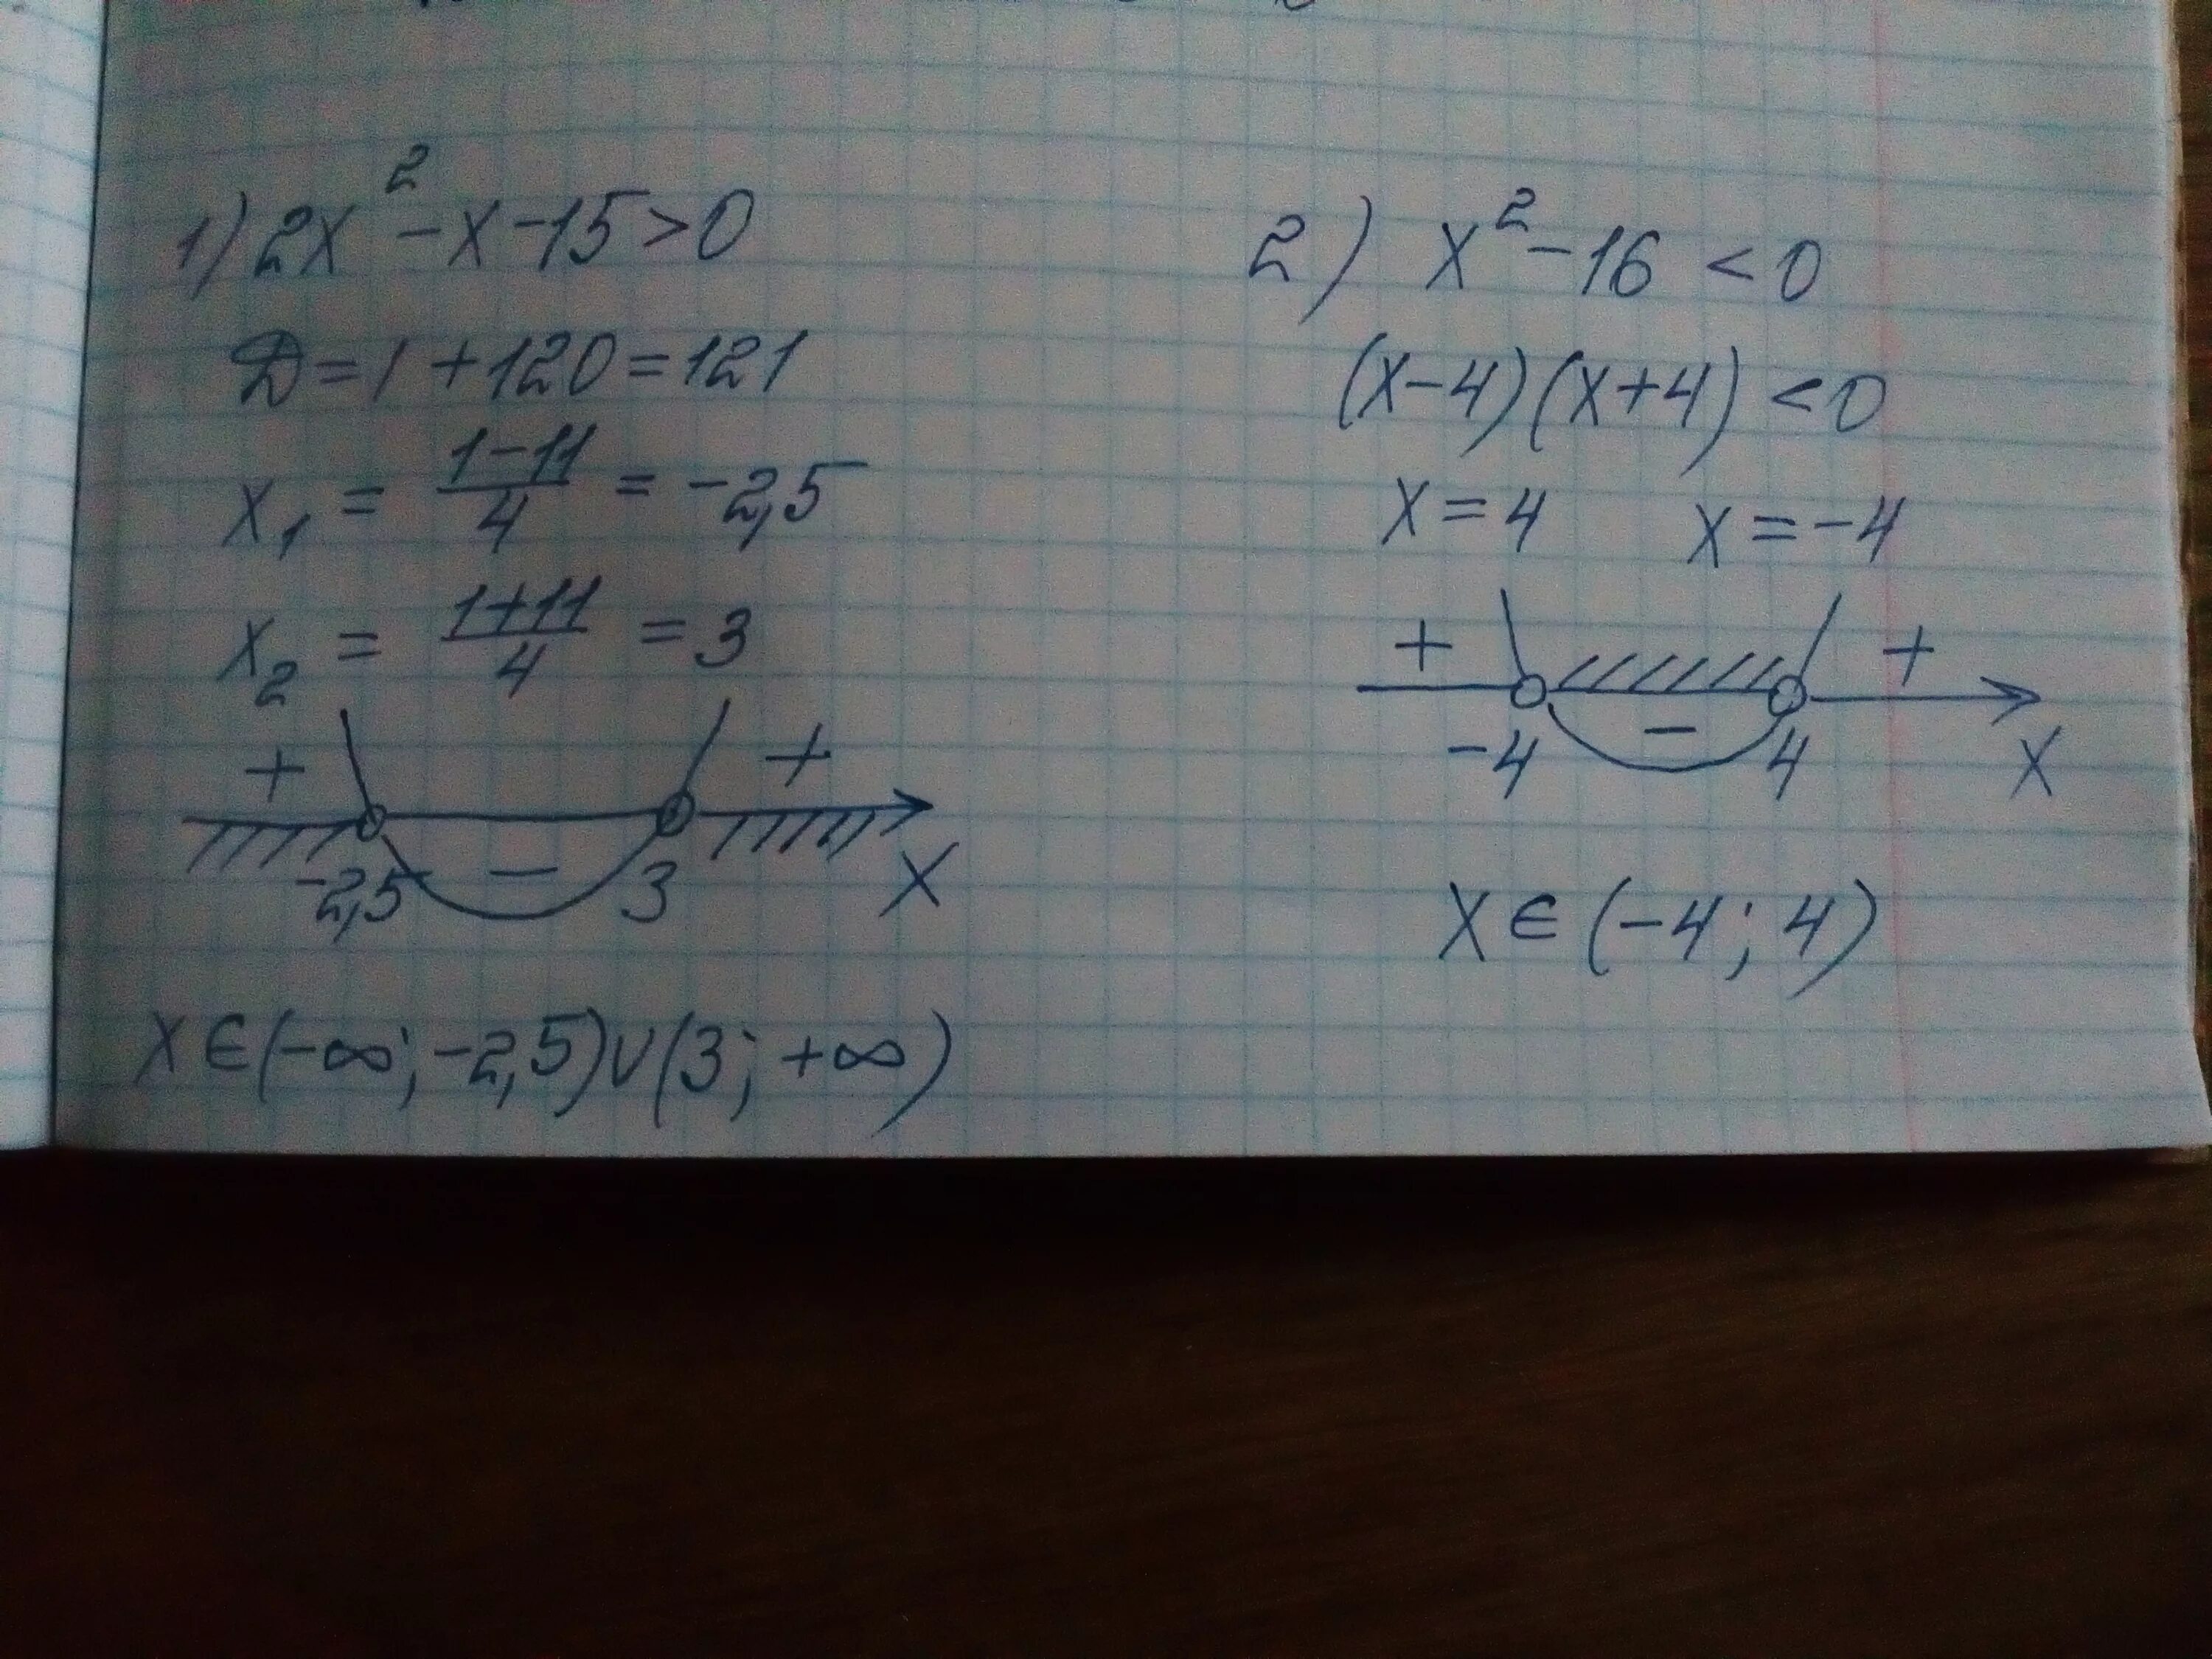 X2-15=2x. X2-2x-15=0. X X + = 2 15.. X2+15x>0.